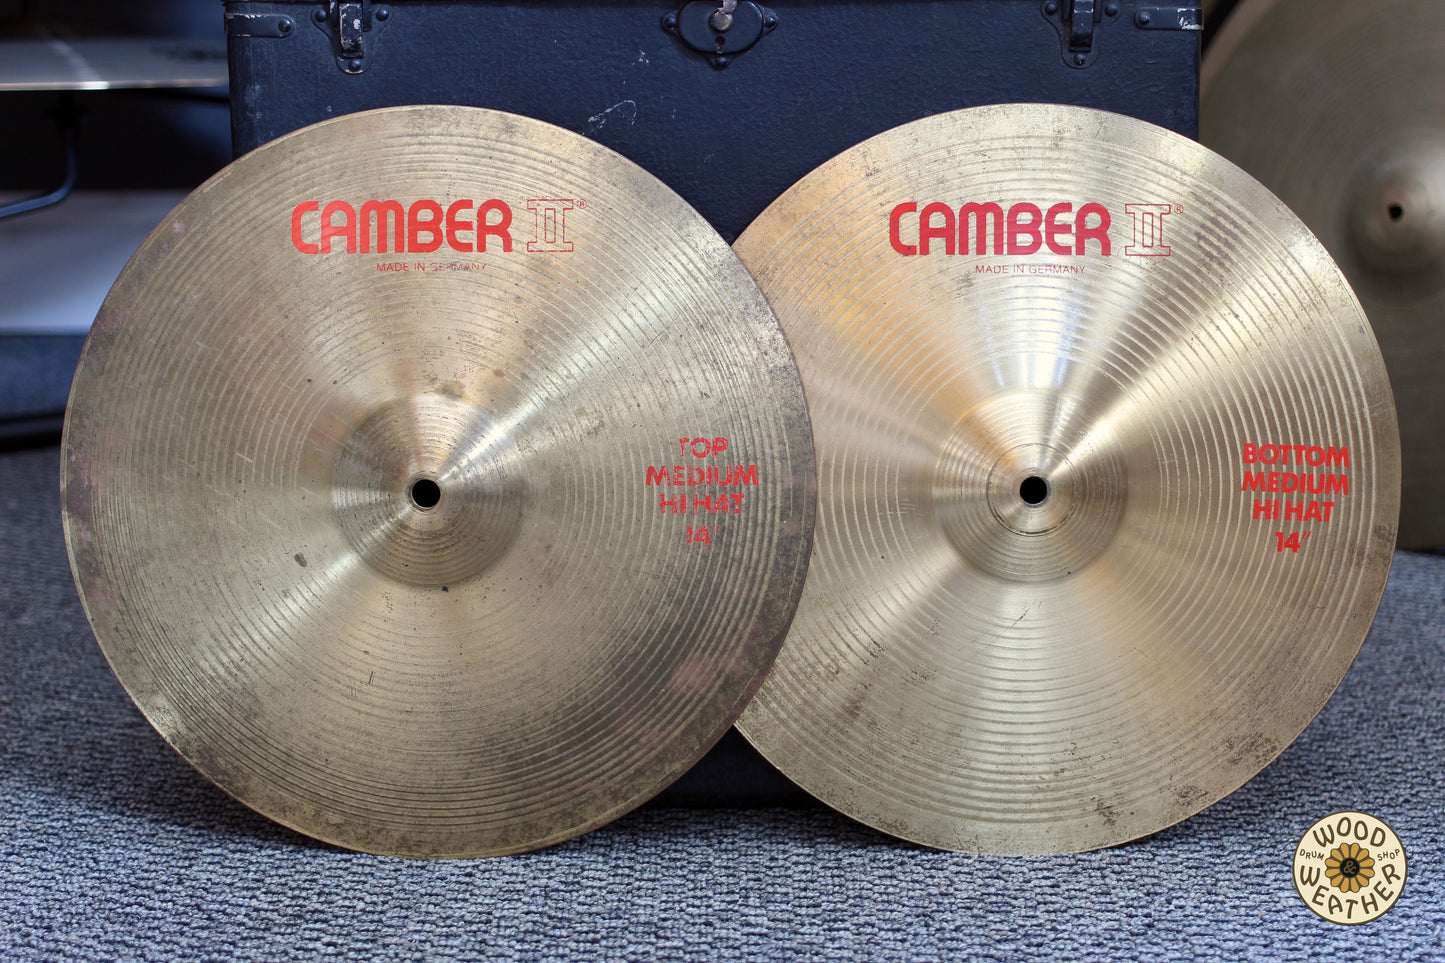 USED Camber II 14" Medium Hi-Hat Cymbals 755/850g